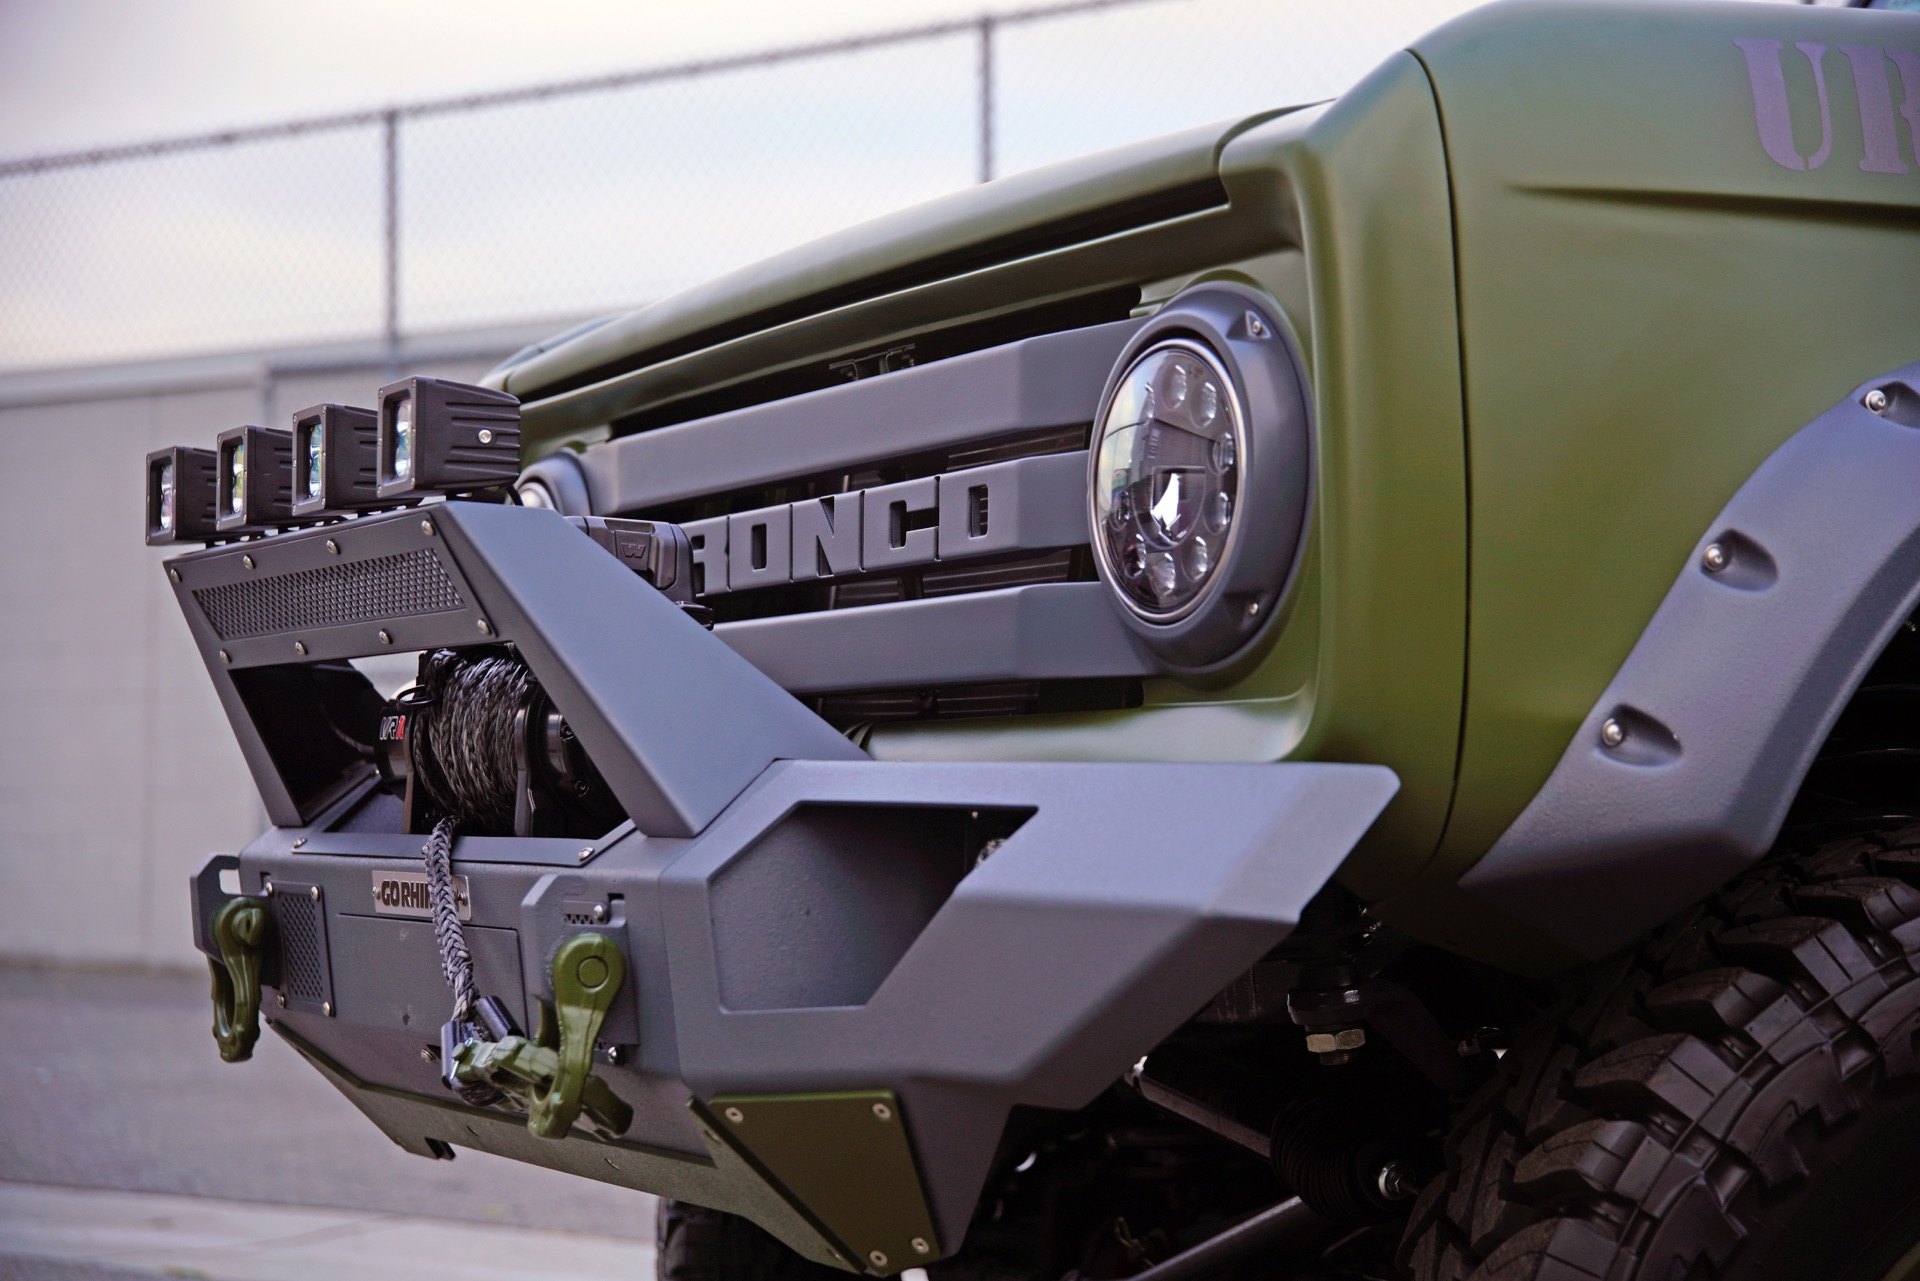 Green Ford Bronco with Dark Smoke Headlights - Photo by Dropstar